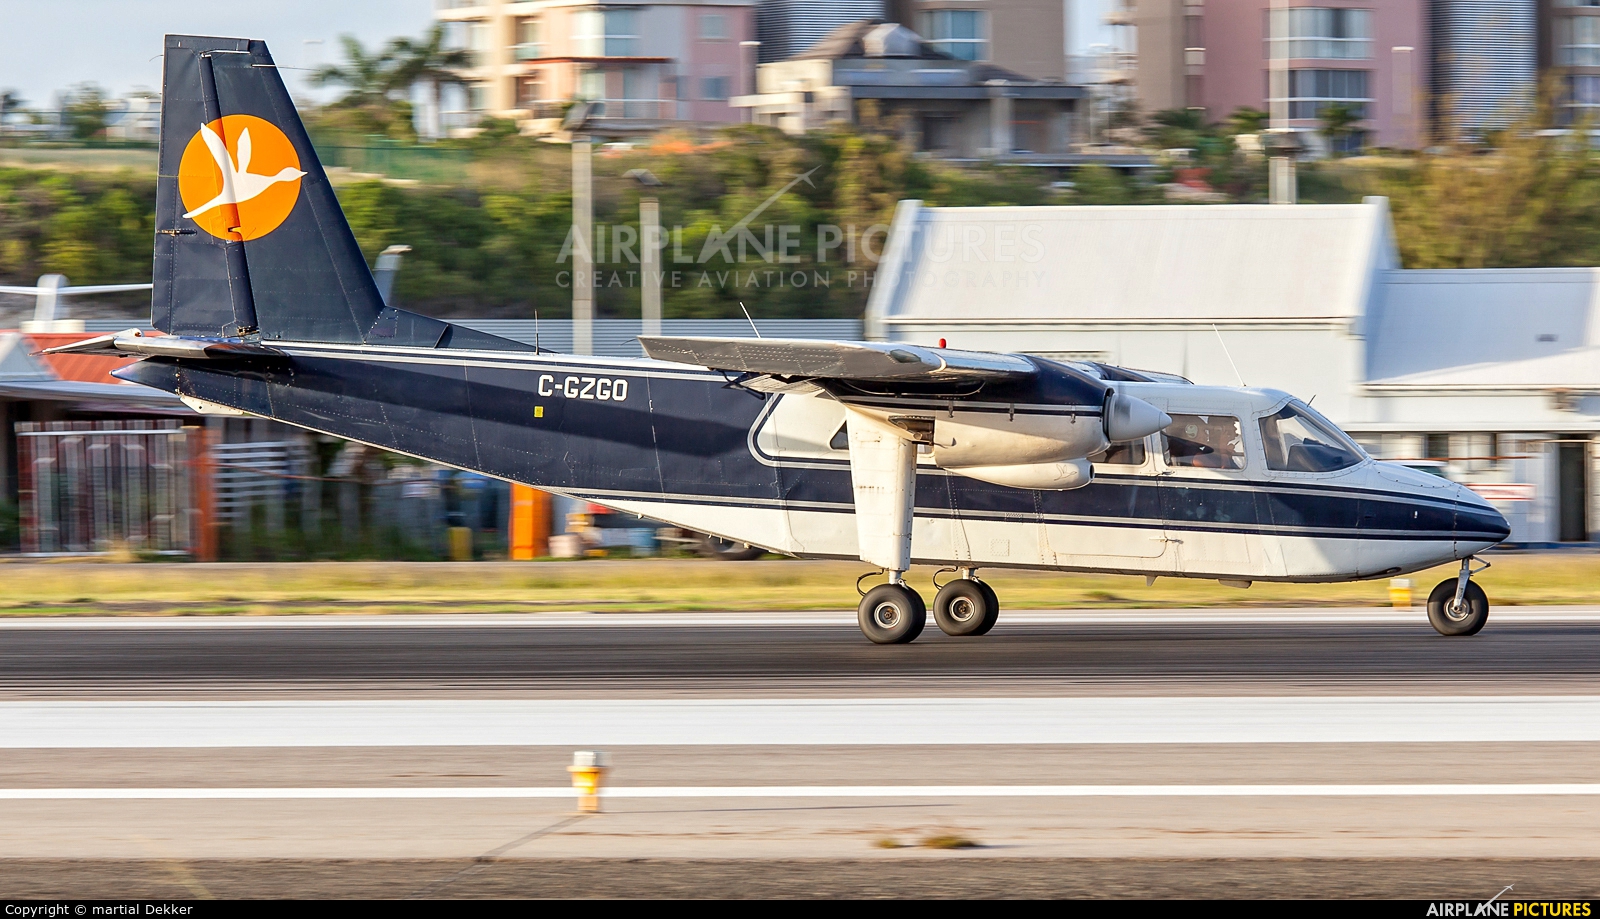 North-Wright Airways Ltd C-GZGO aircraft at Sint Maarten - Princess Juliana Intl